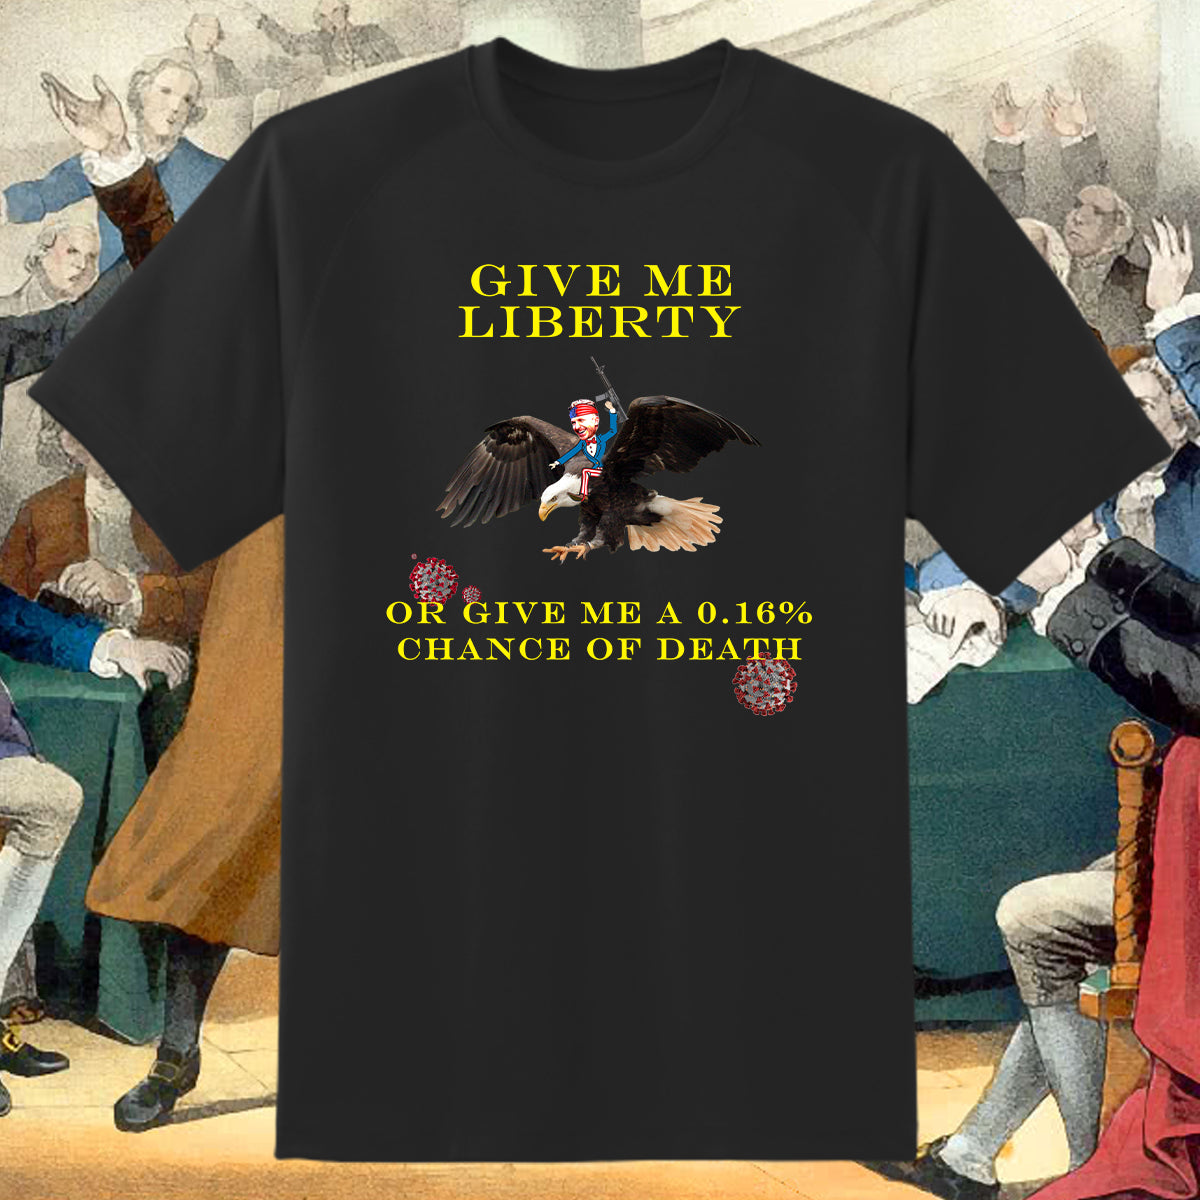 "Give Me Liberty" T-Shirt